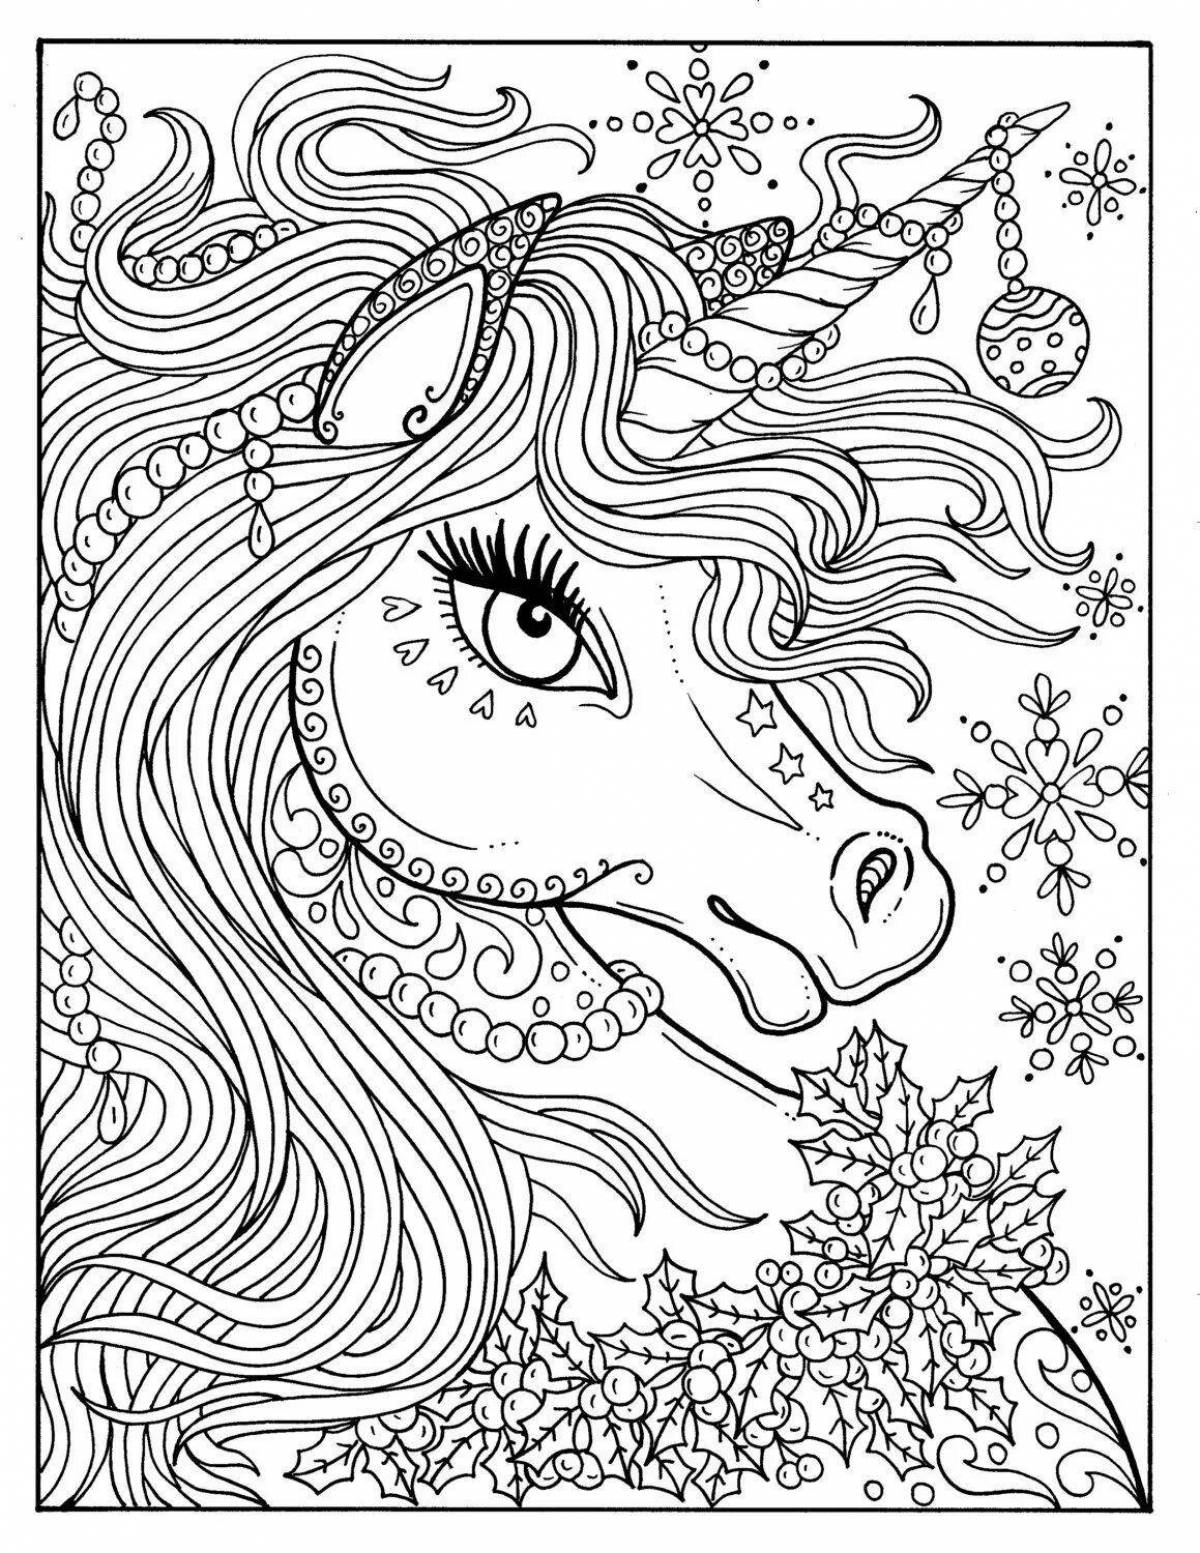 Inviting unicorn Christmas coloring book